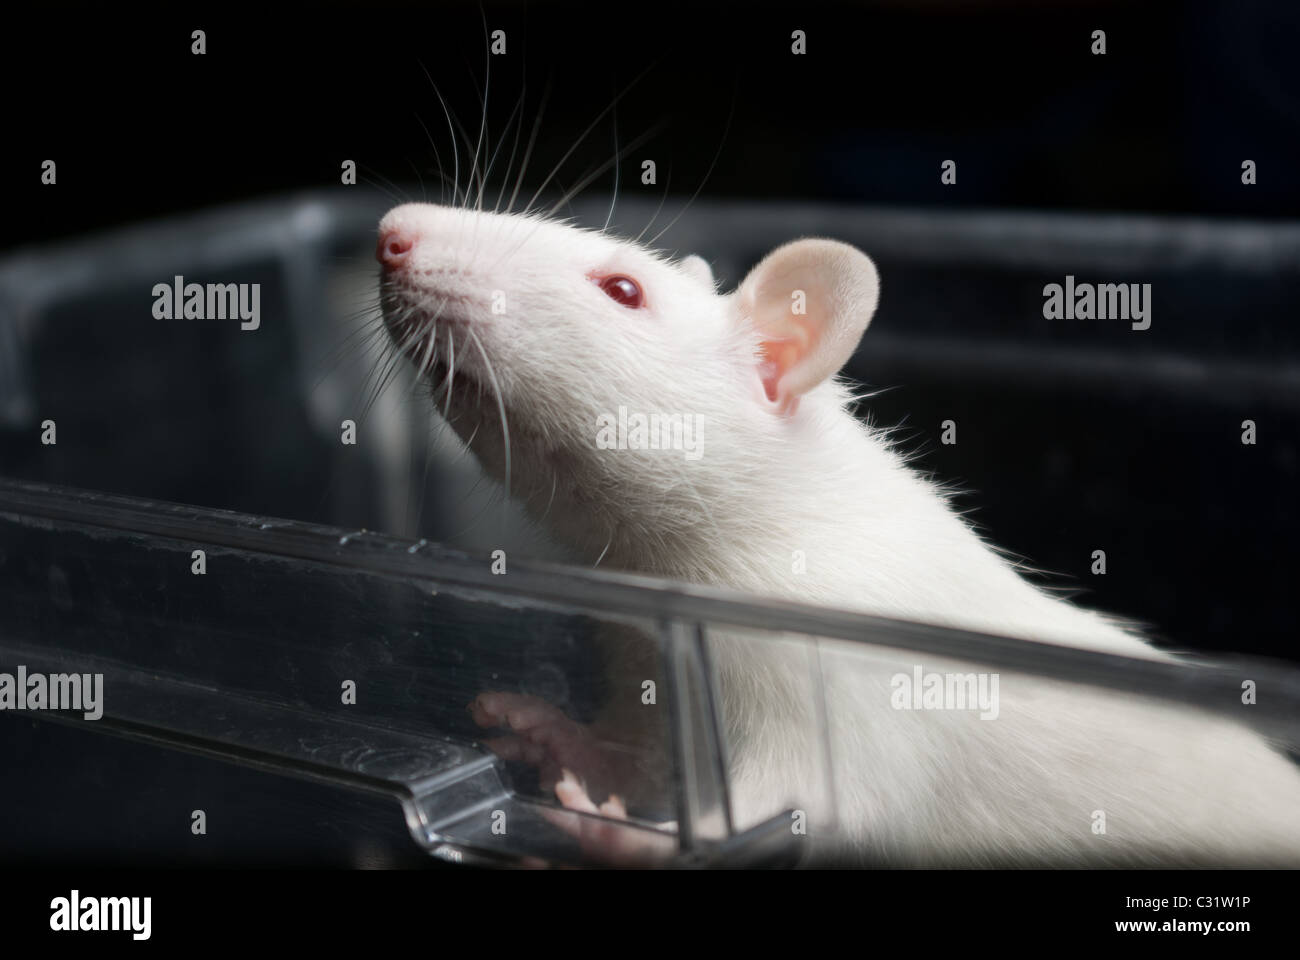 https://c8.alamy.com/comp/C31W1P/white-albino-laboratory-rat-in-acrylic-cage-peeking-and-climbing-out-C31W1P.jpg